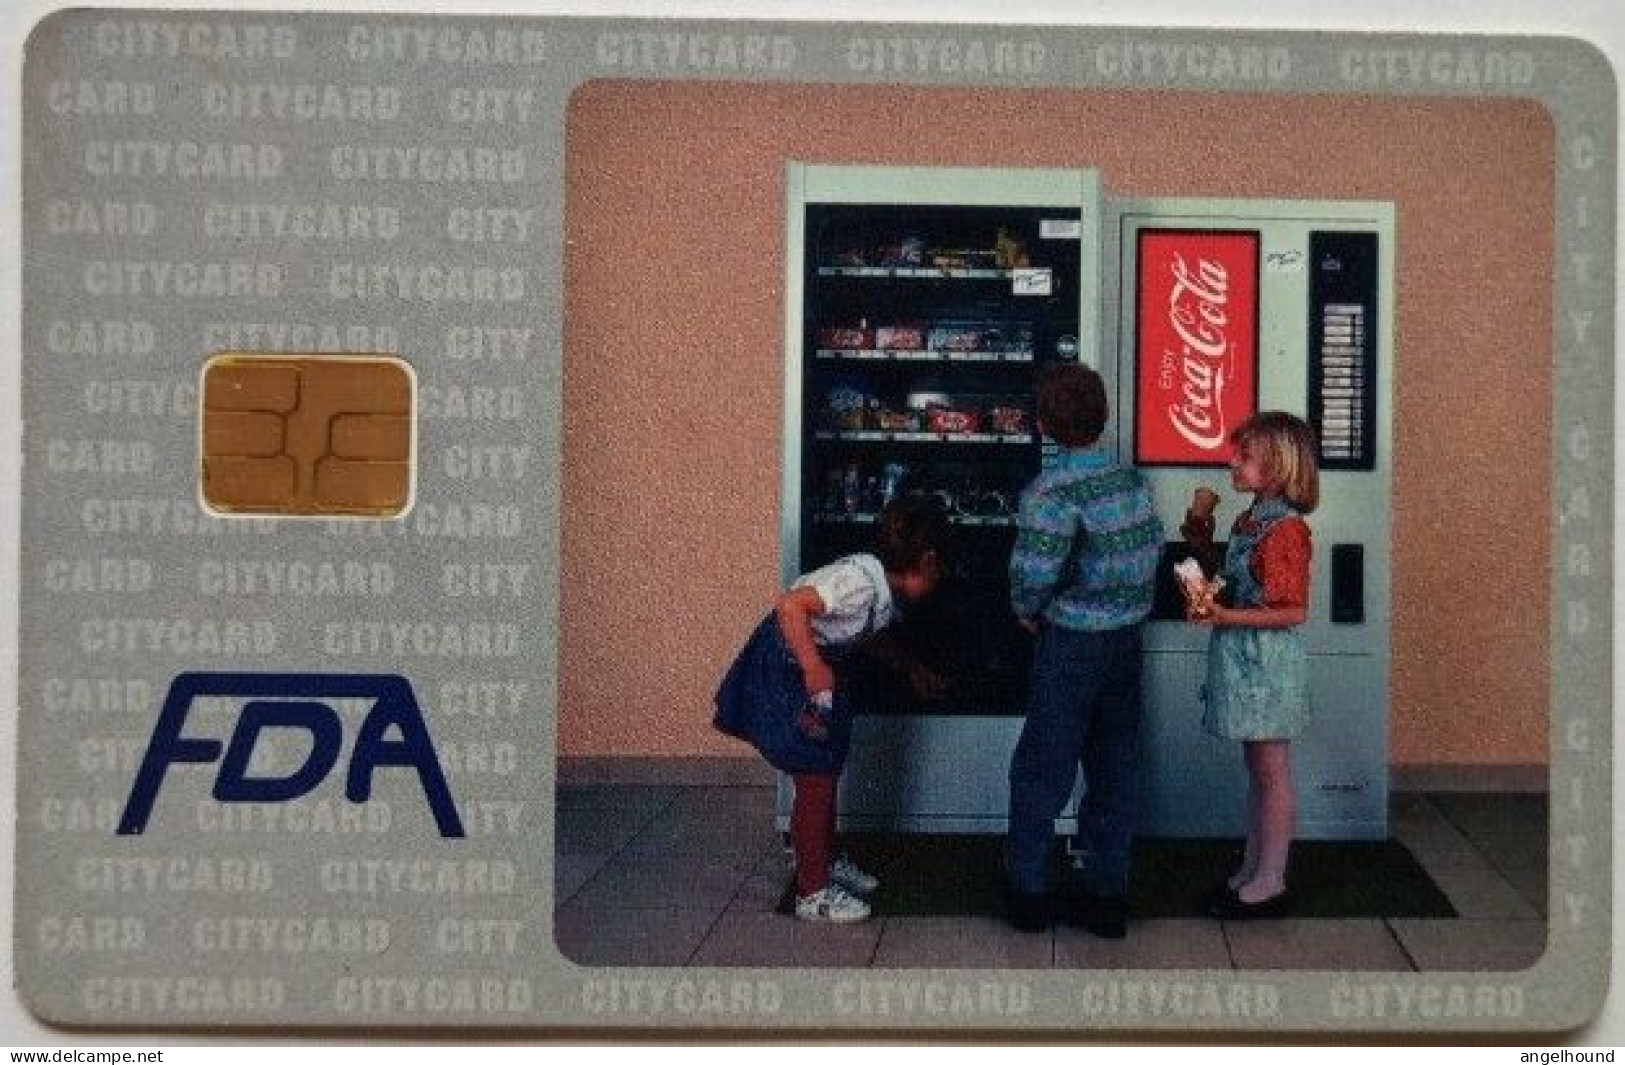 Czech Republic 300 KC FDA  City Card - Coca Cola - Czech Republic